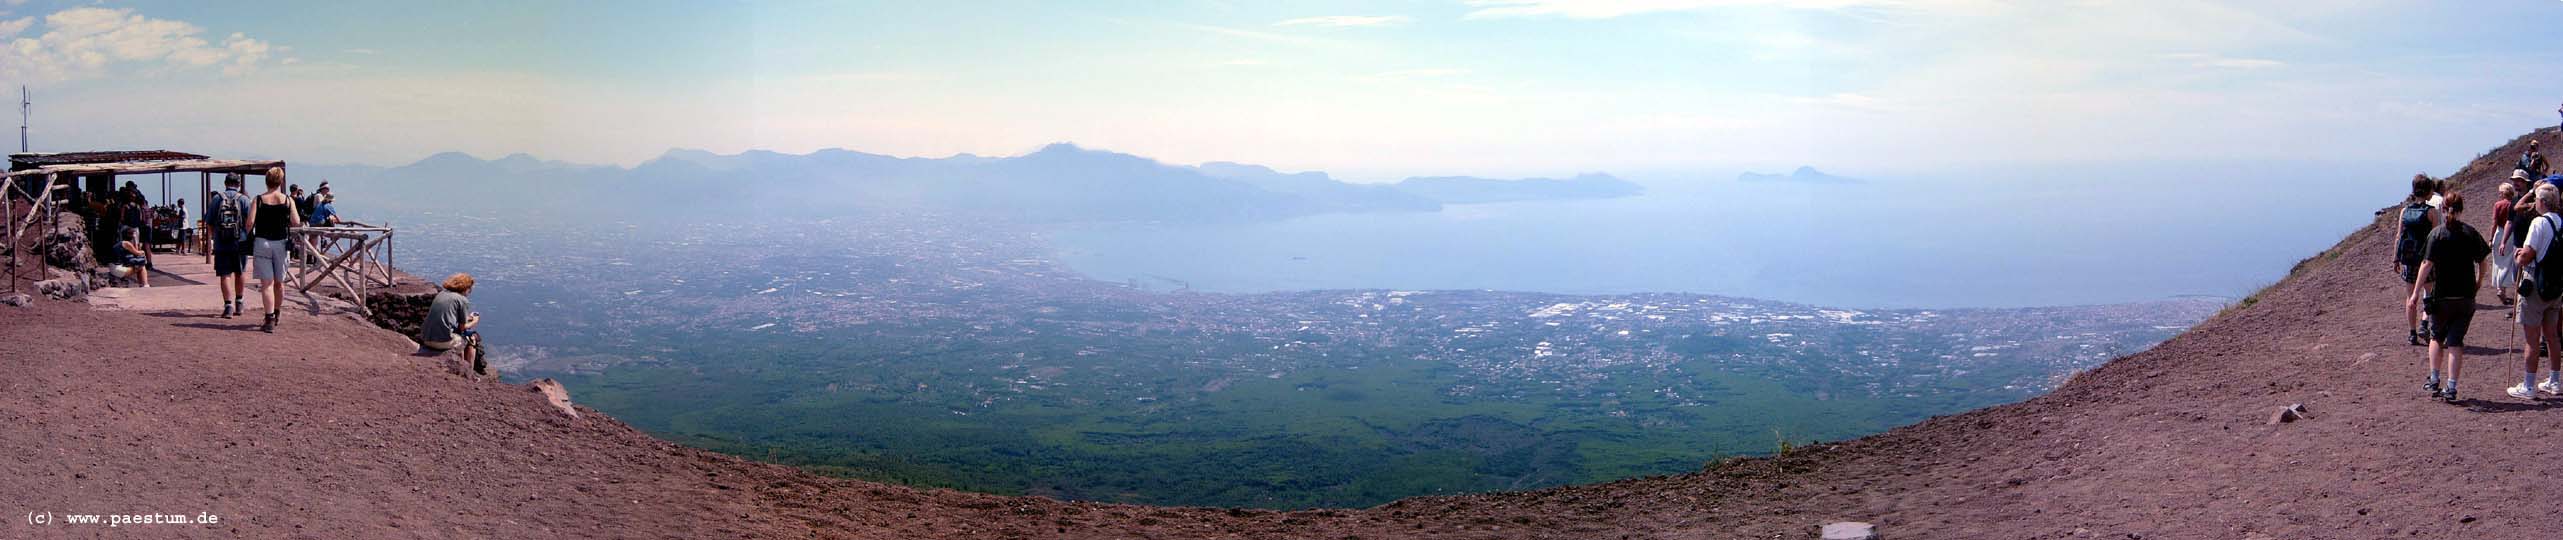 Panorama Halbinsel Sorrent vom Vesuv